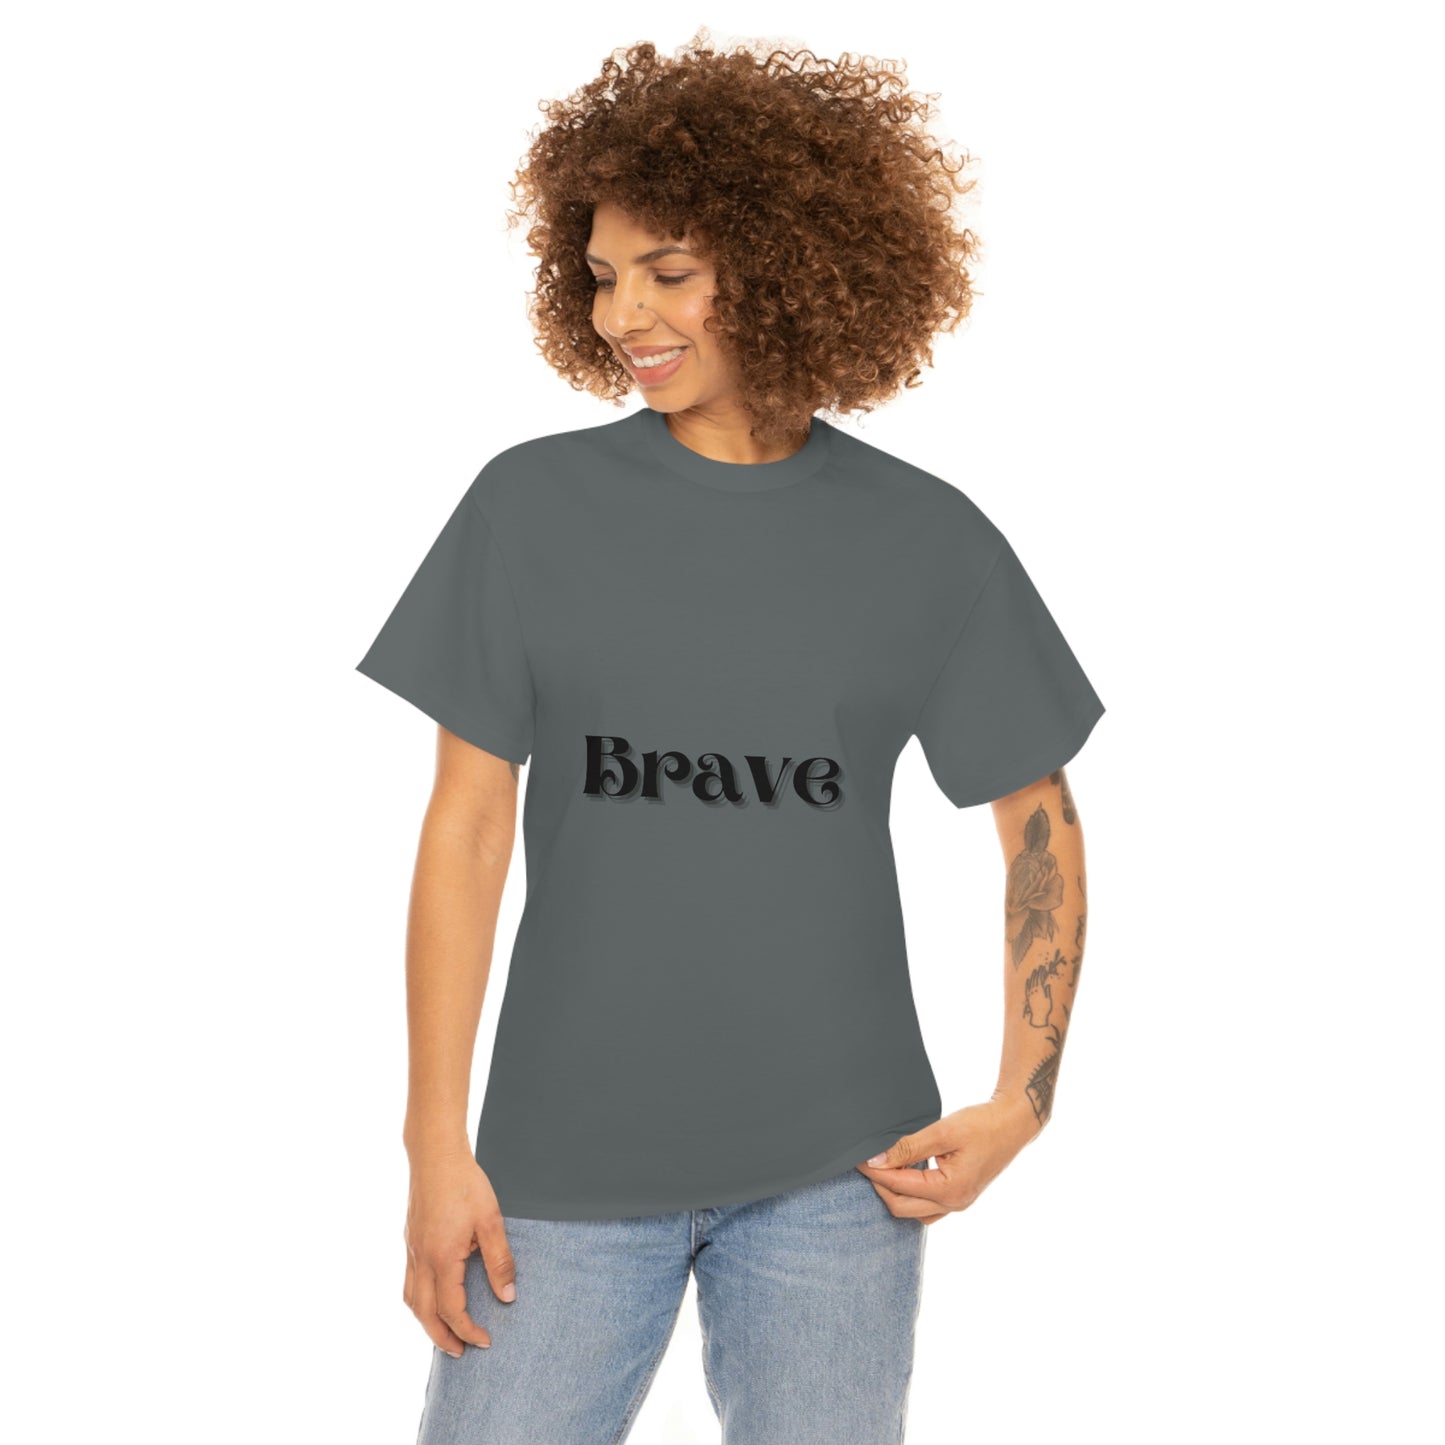 Brave T-shirt